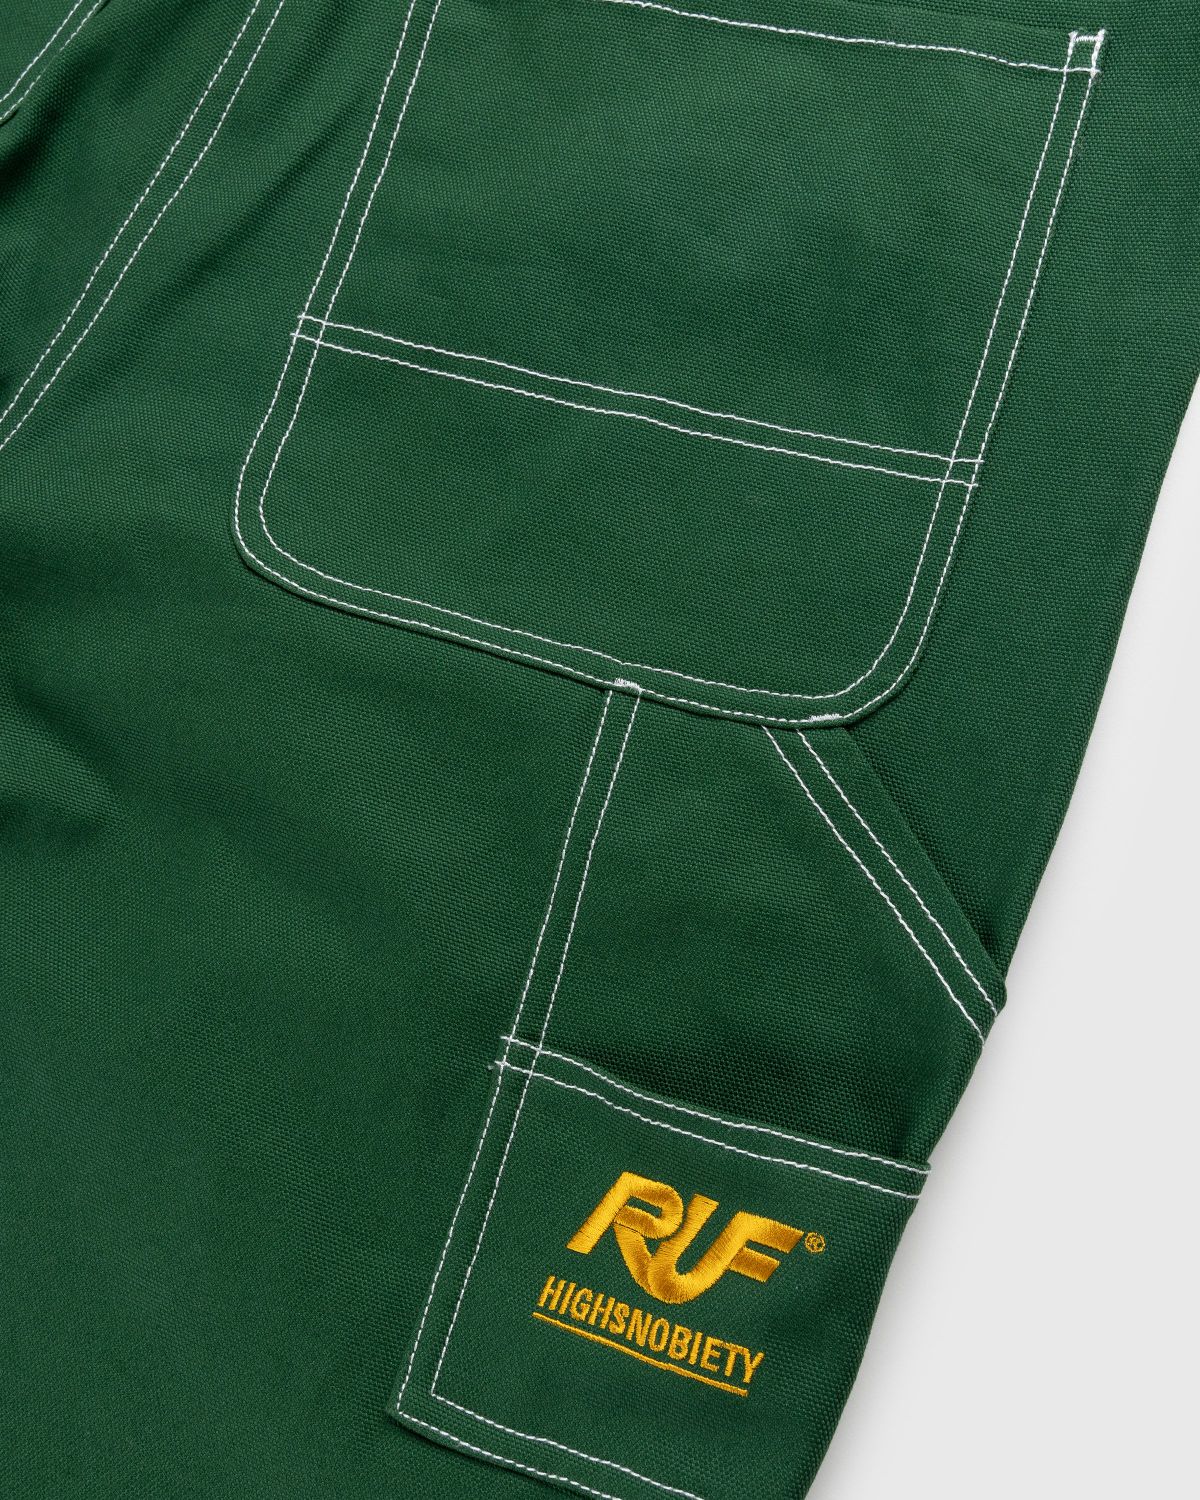 RUF x Highsnobiety – Cotton Overalls Green - Pants - Green - Image 7